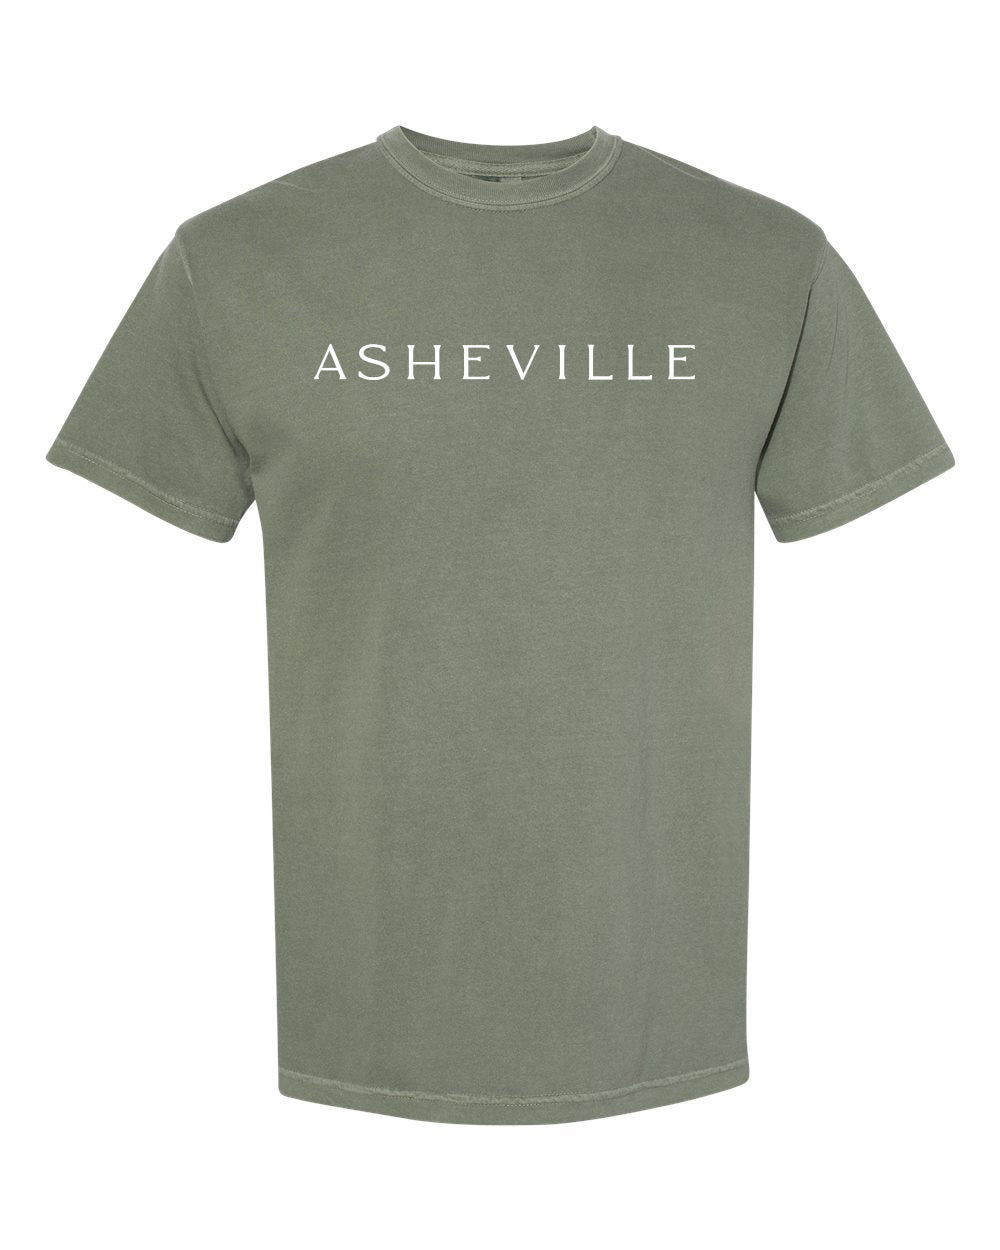 AVL Adventure T-Shirt Moss Green - The ASHEVILLE Co. TM